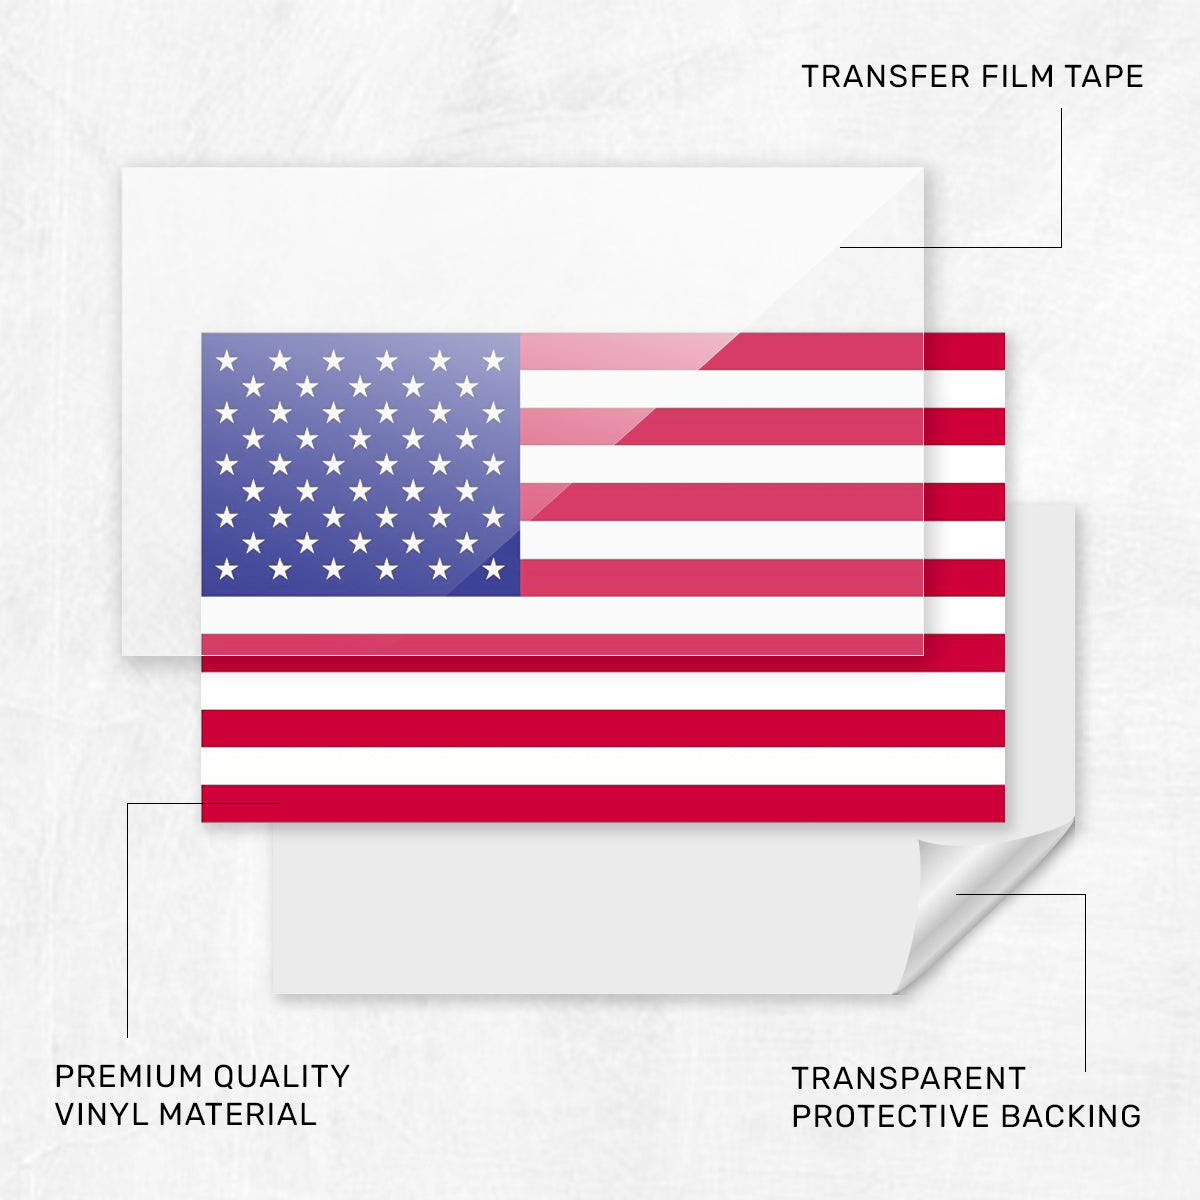 New General American Flag Premium Vynl Decals - Mini Classic American Flag Decal - 2-Pack